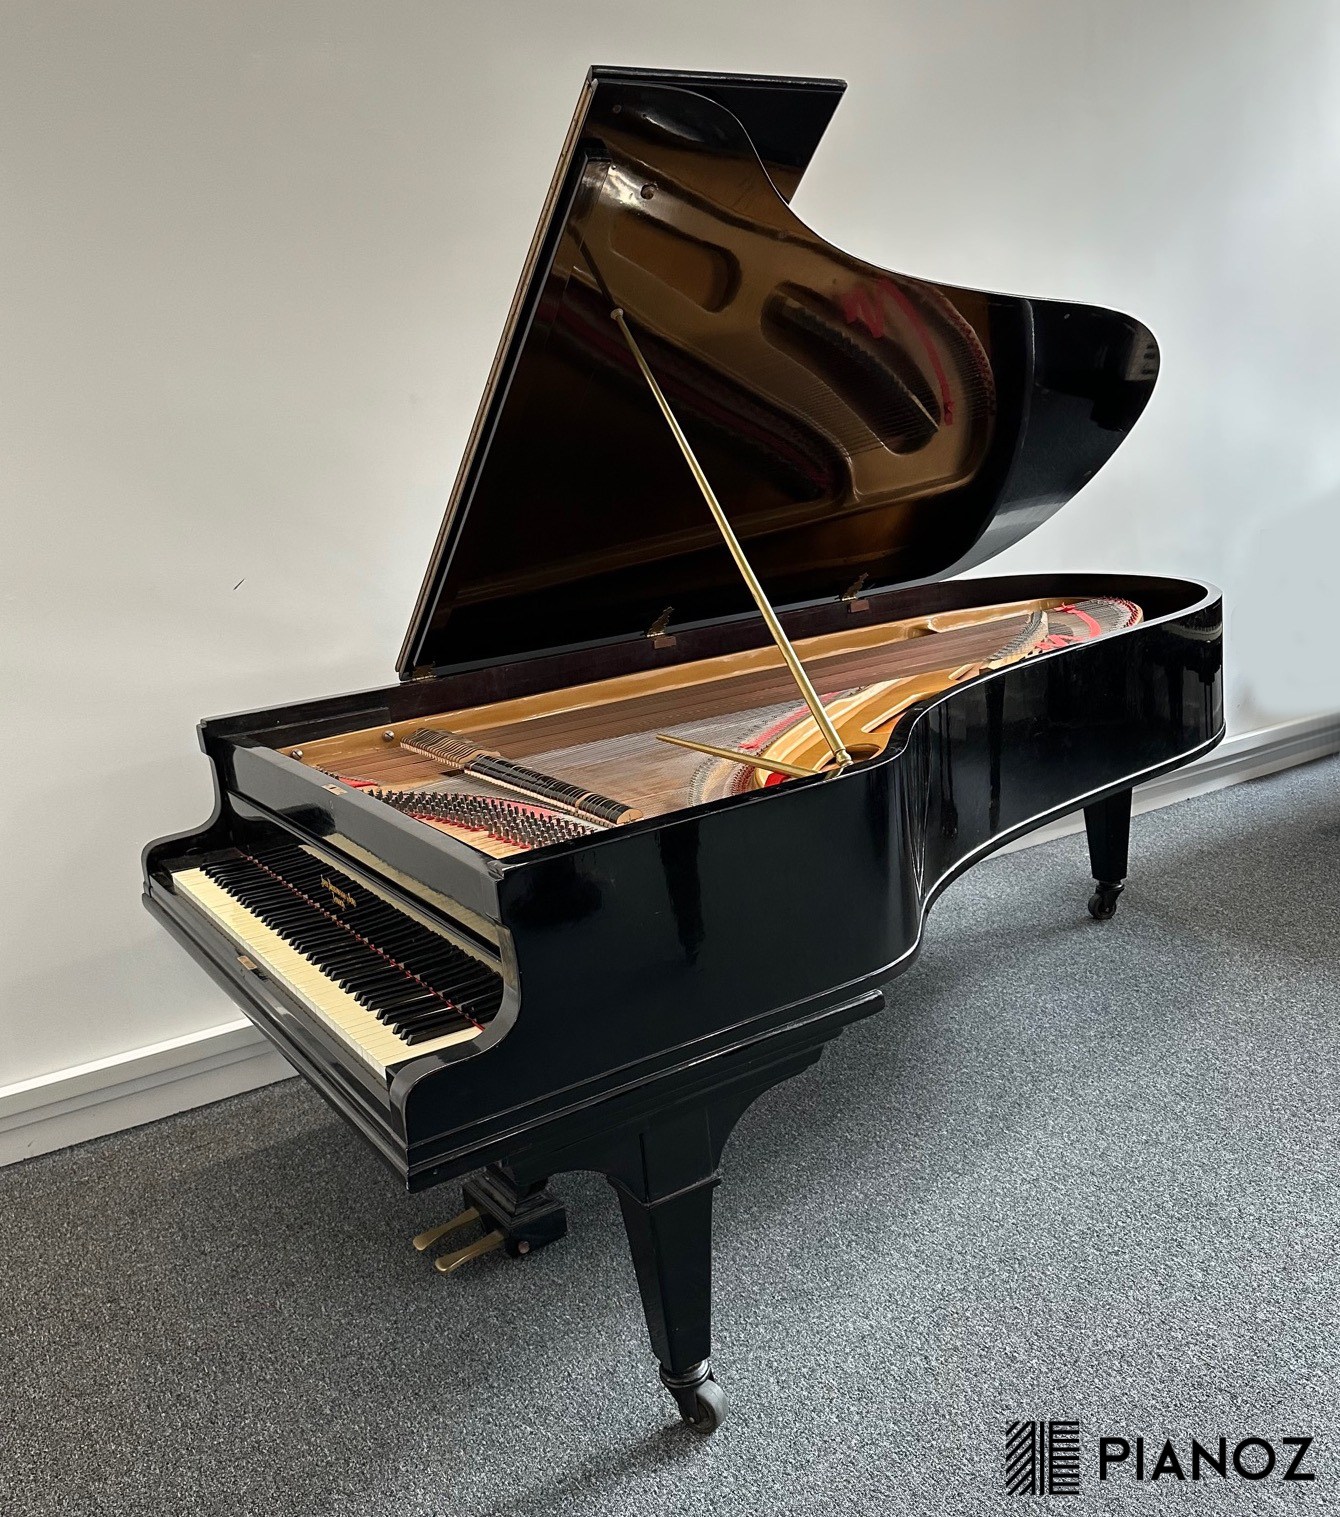 Broadwood Barless Fully Restored Concert Grand piano for sale in UK